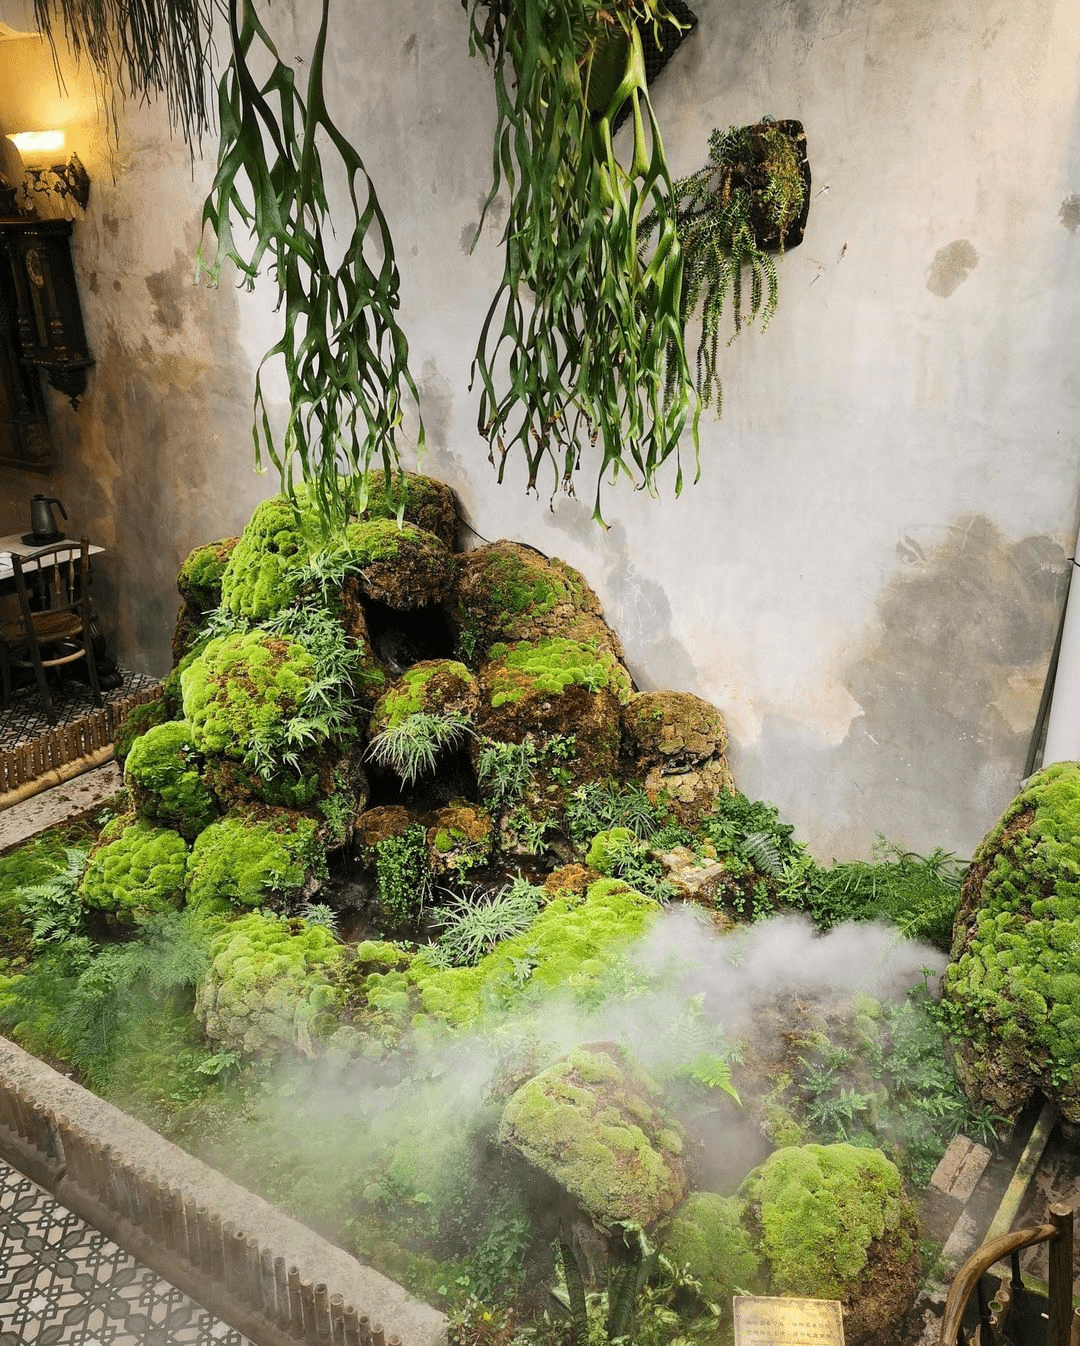 Bao Teck Tea House in Penang has an indoor moss garden - moss garden